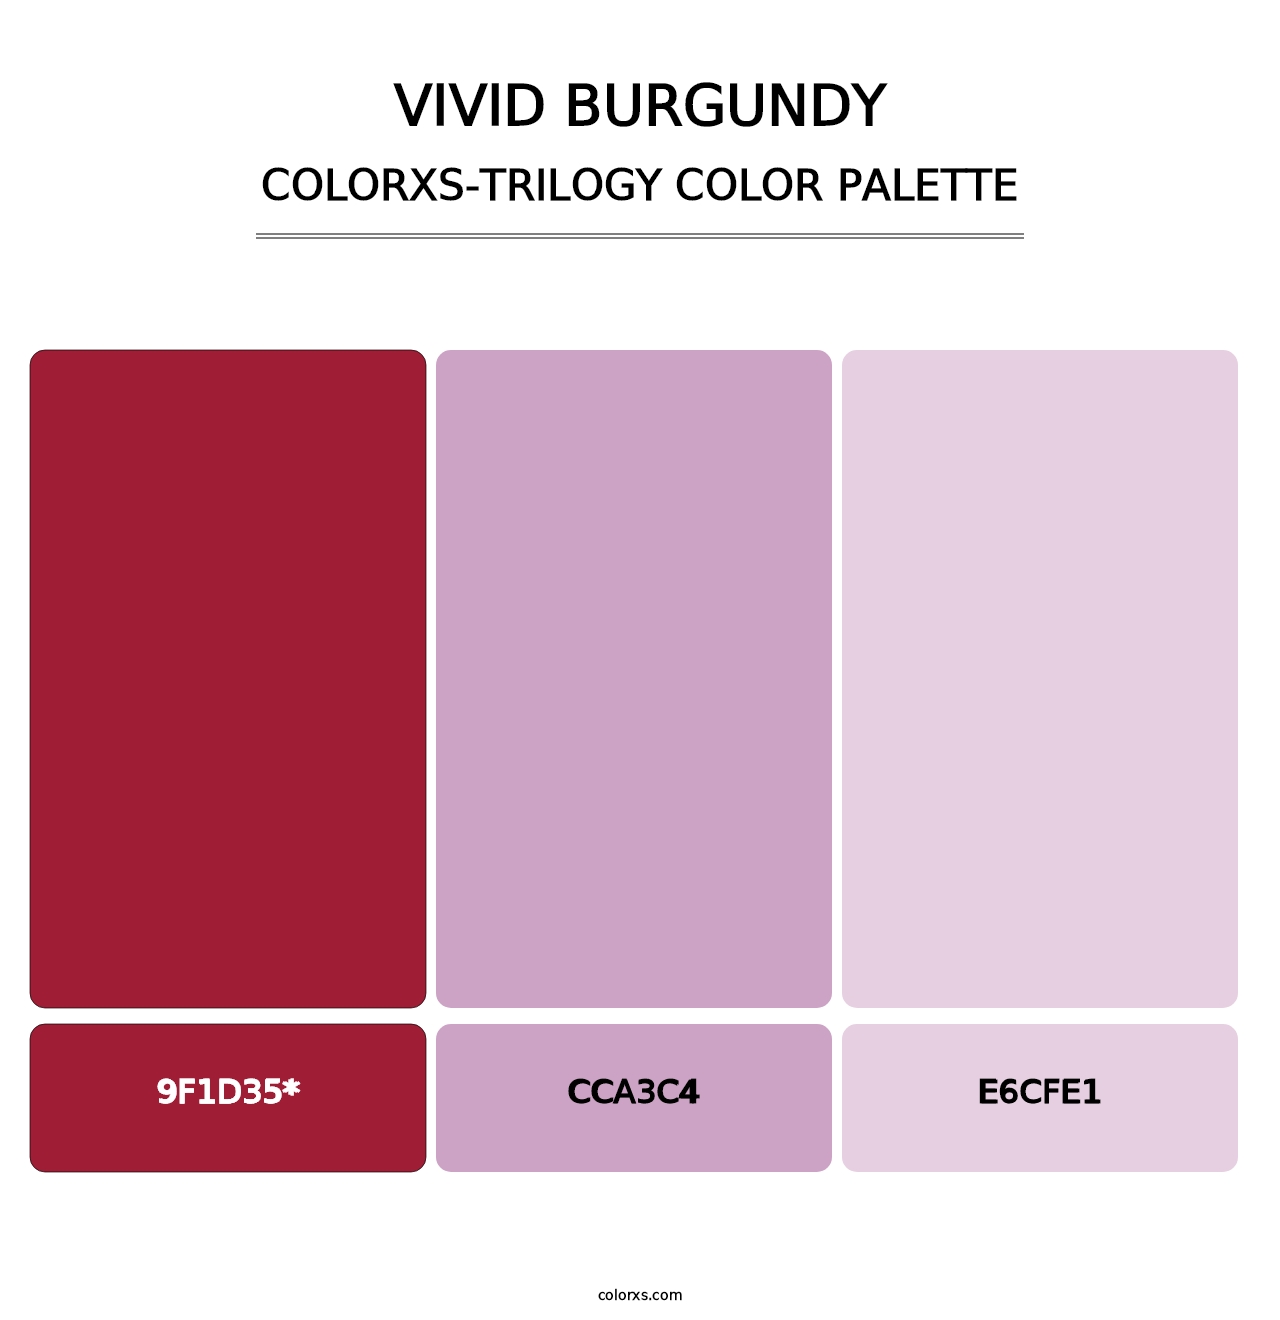 Vivid Burgundy - Colorxs Trilogy Palette